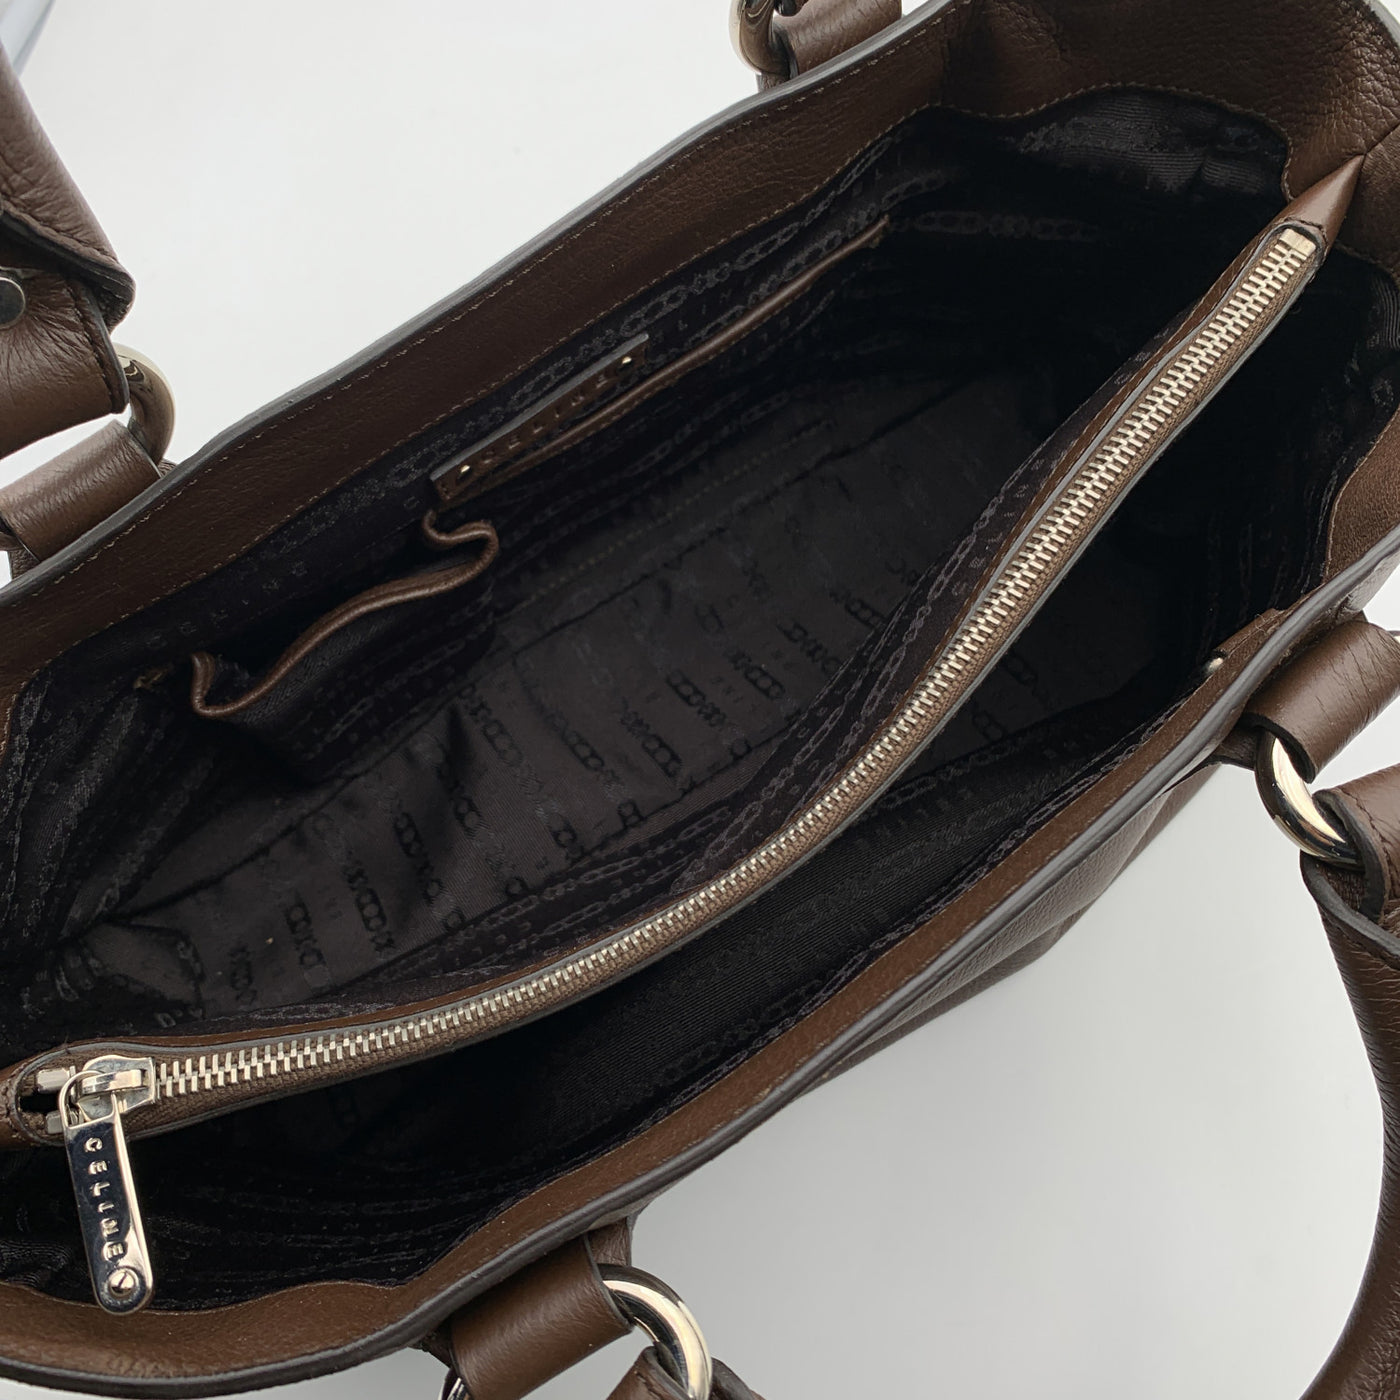 Celine Brown Canvas Leather Boogie Satchel Tote Bag Handbag